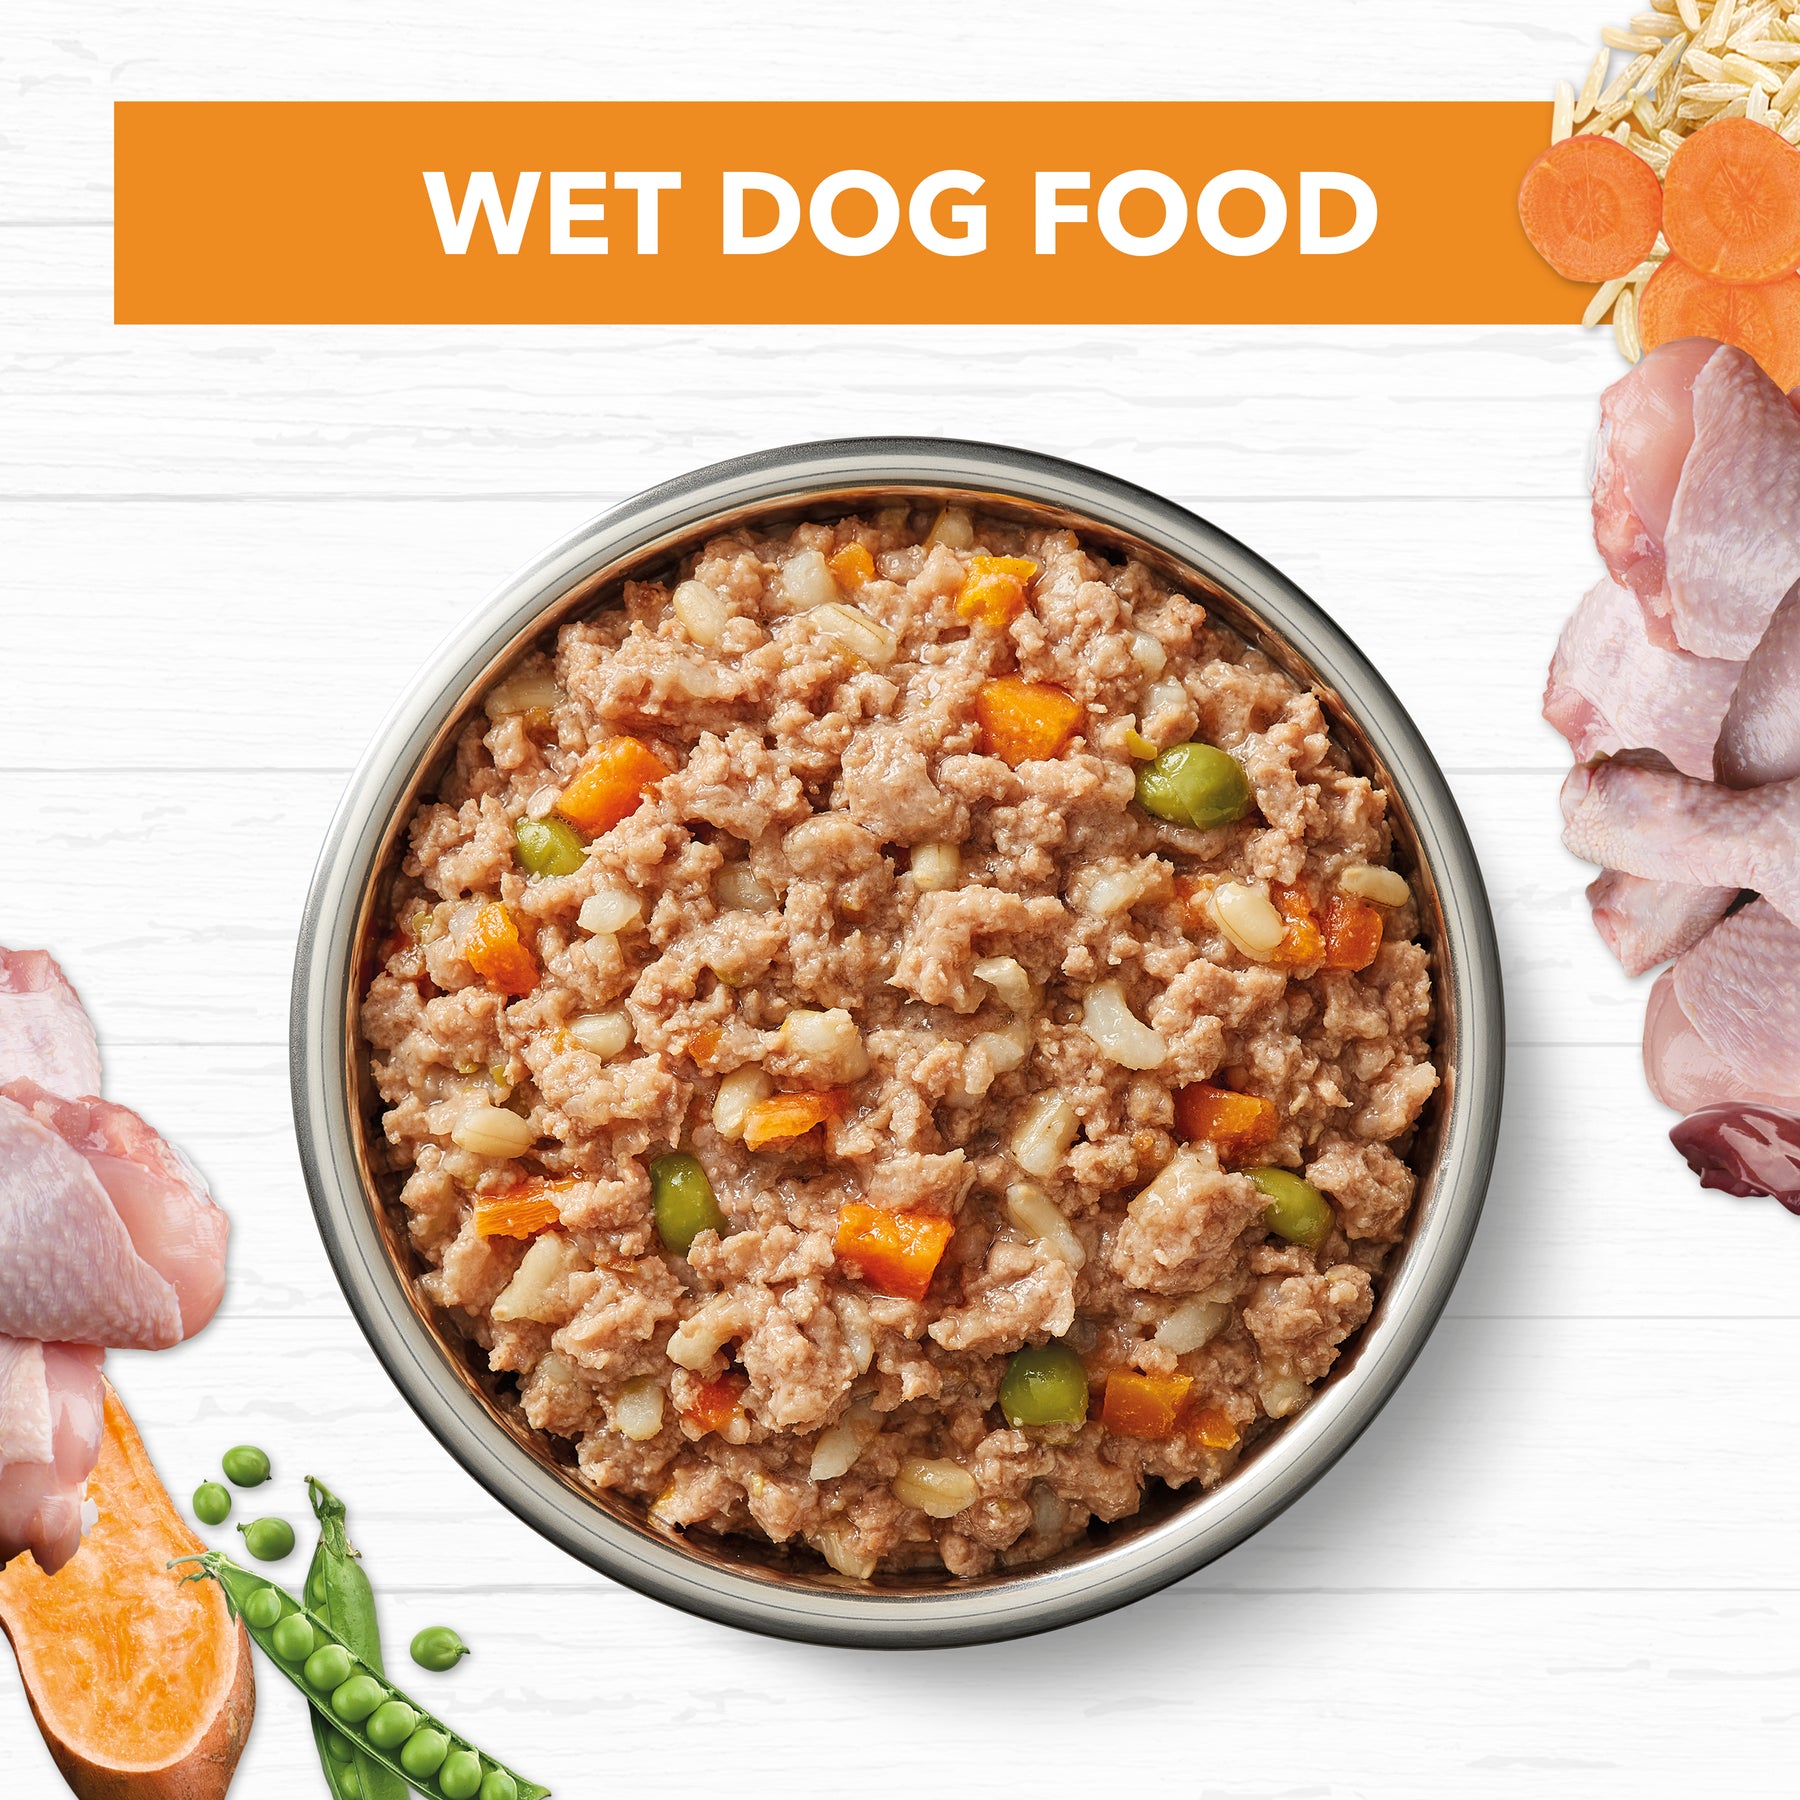 Holistic Nutrition Adult Wet Dog Food Chicken & Brown Rice Loaf 400g